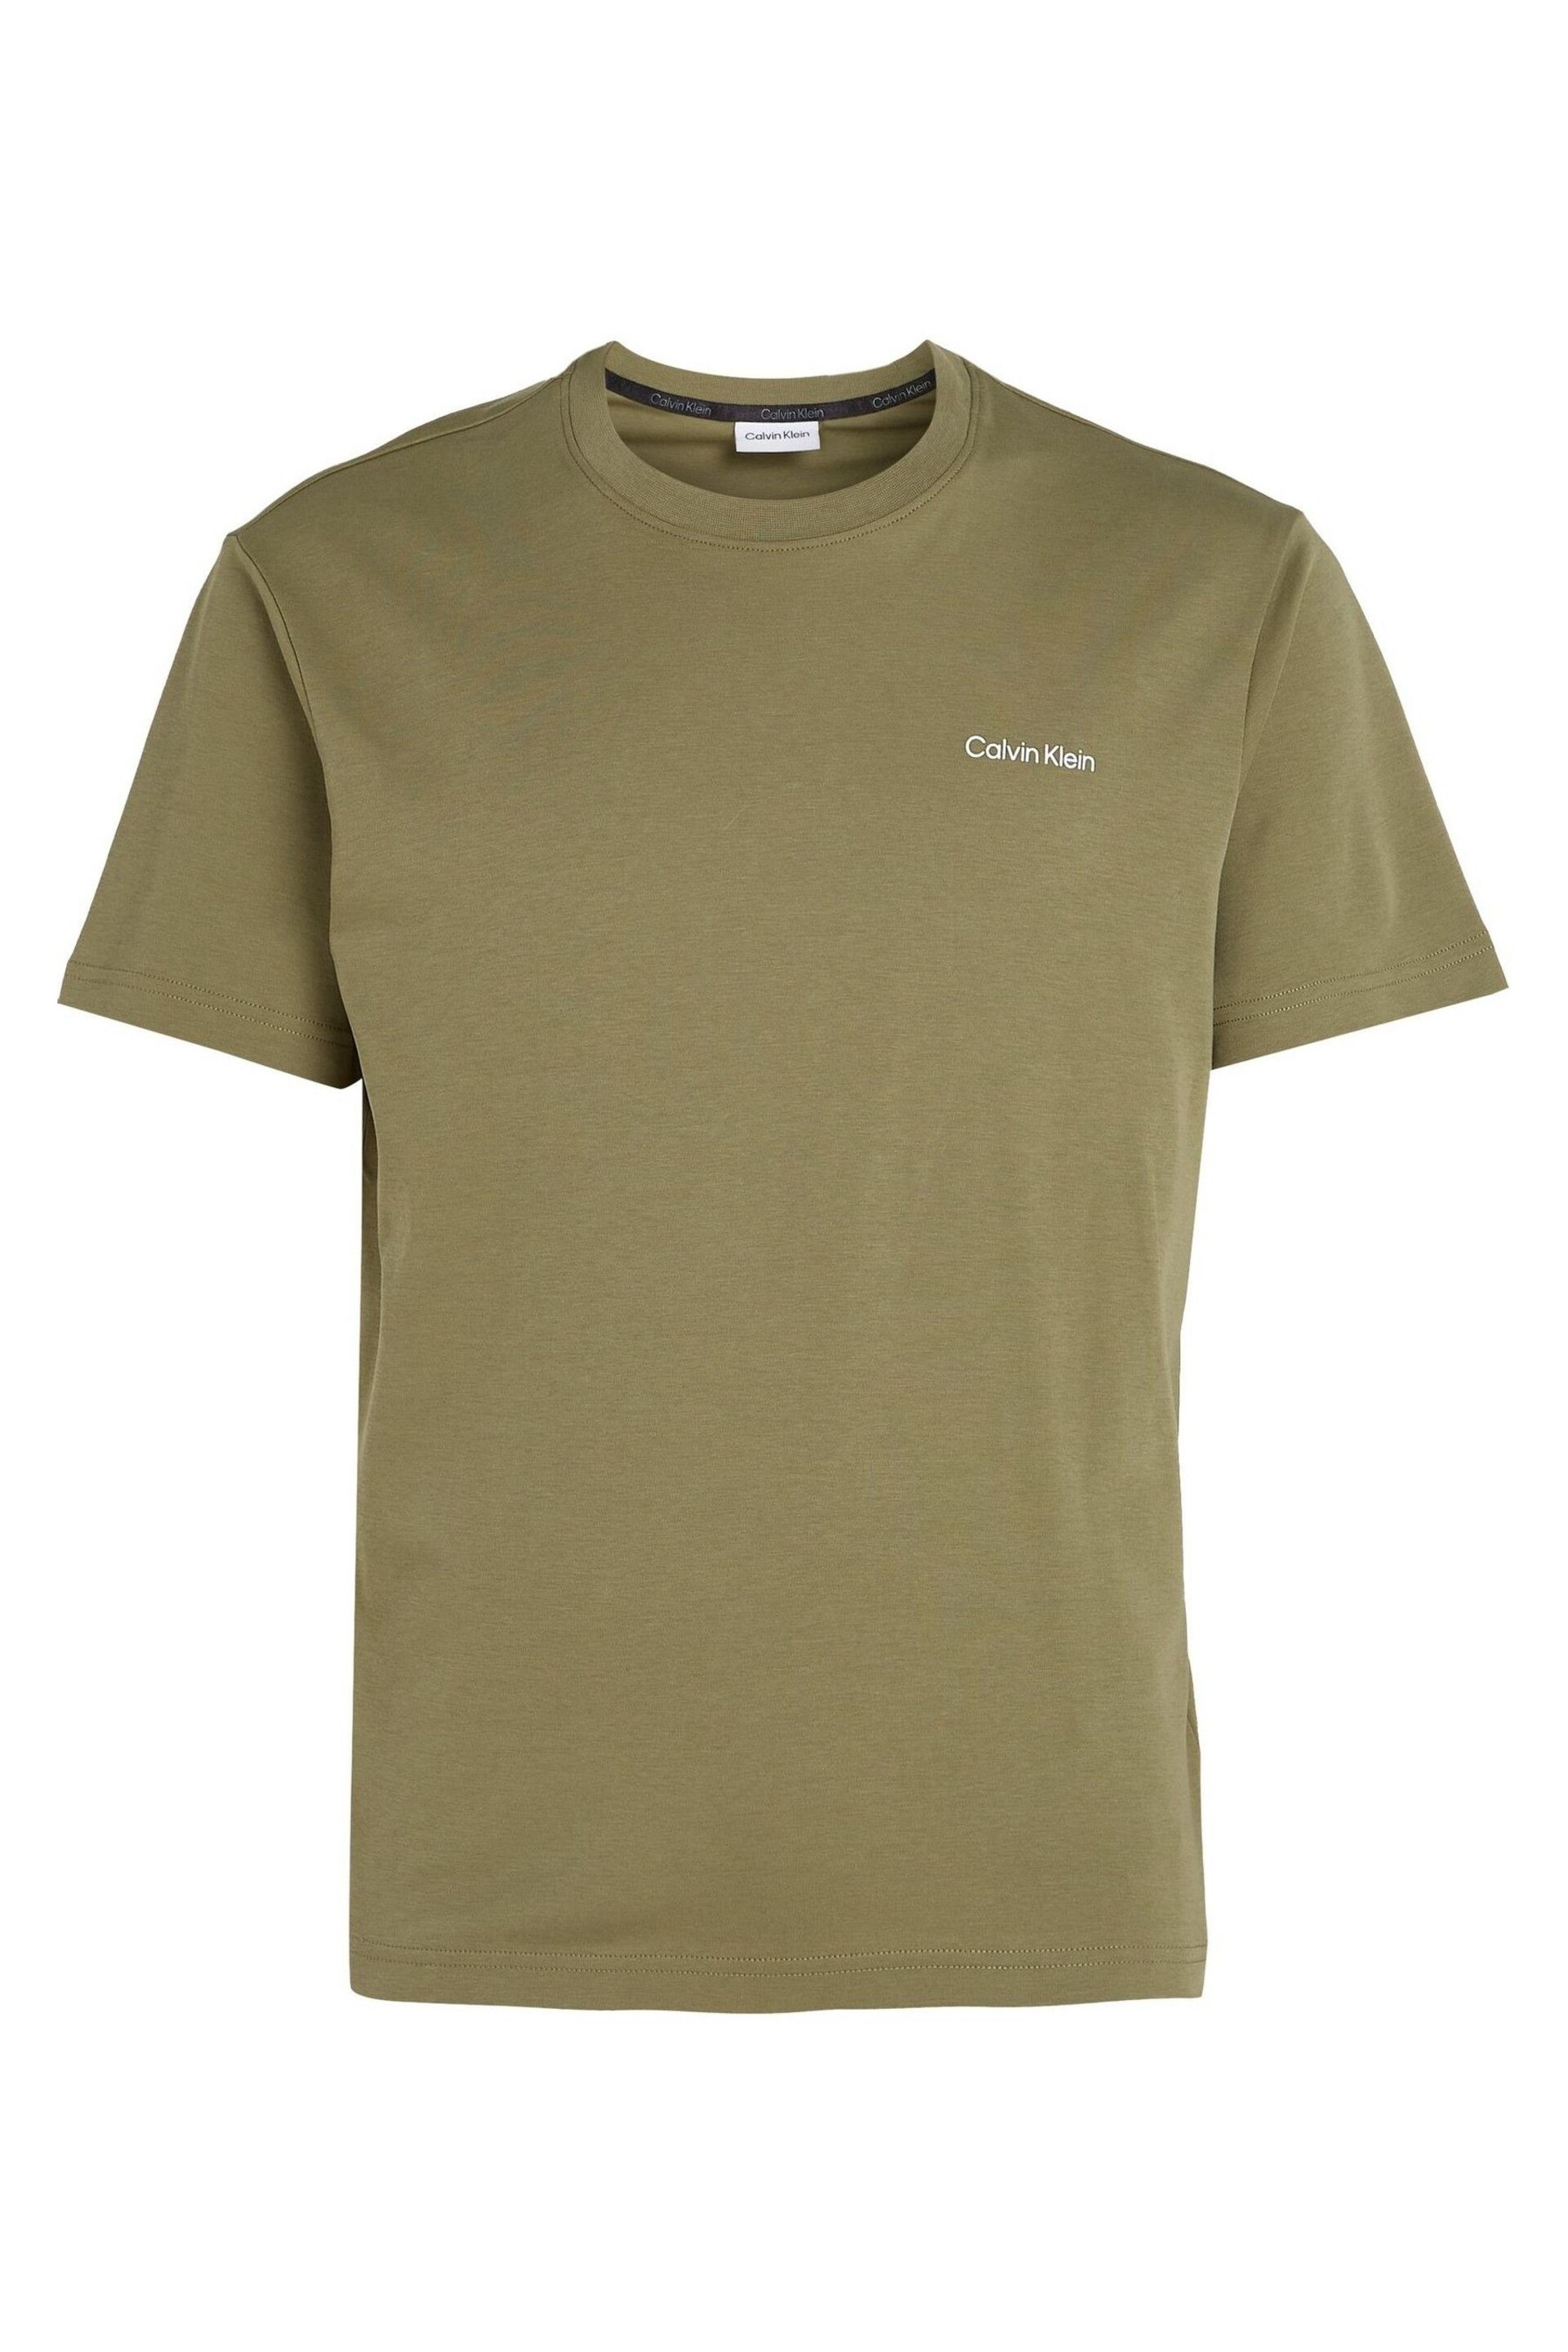 Calvin Klein Green Micro Logo Interlock T-Shirt - Image 4 of 5